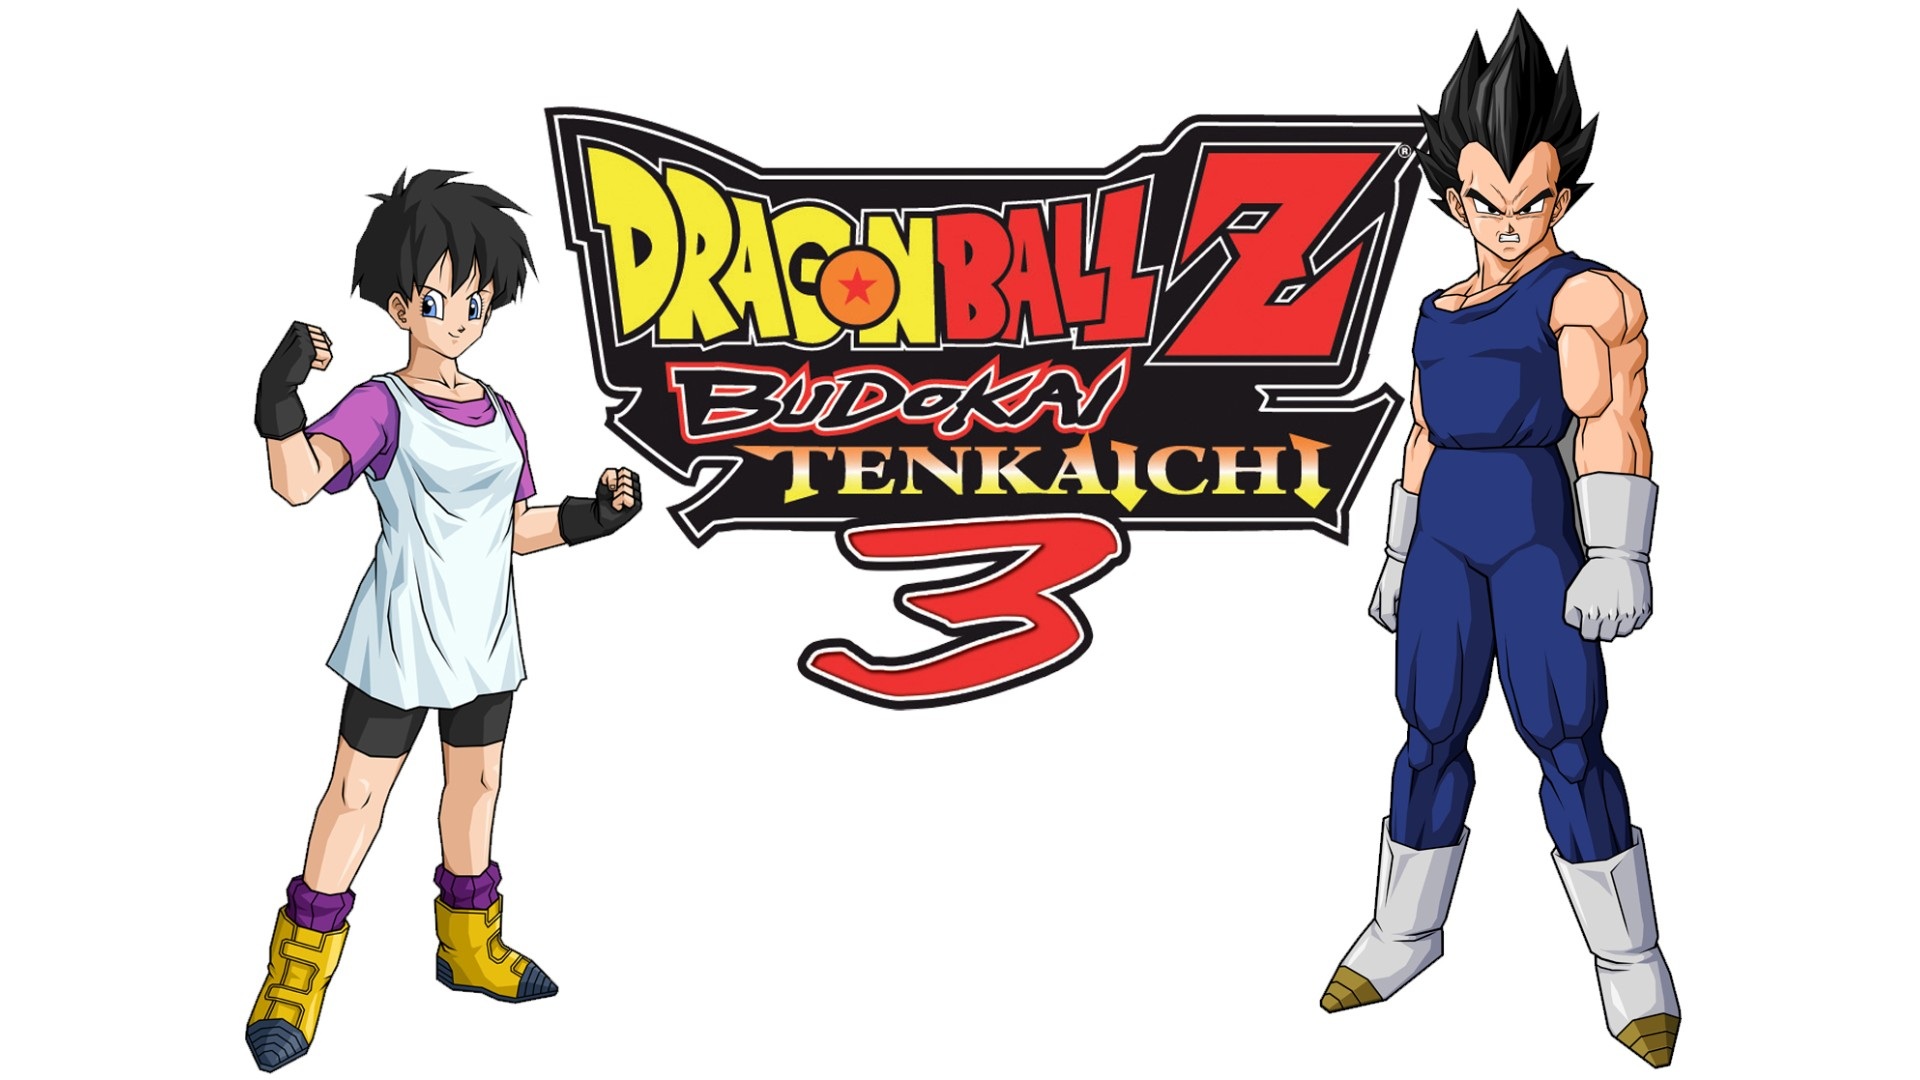 Dragon Ball Z Budokai Tenkaichi 3 Details LaunchBox